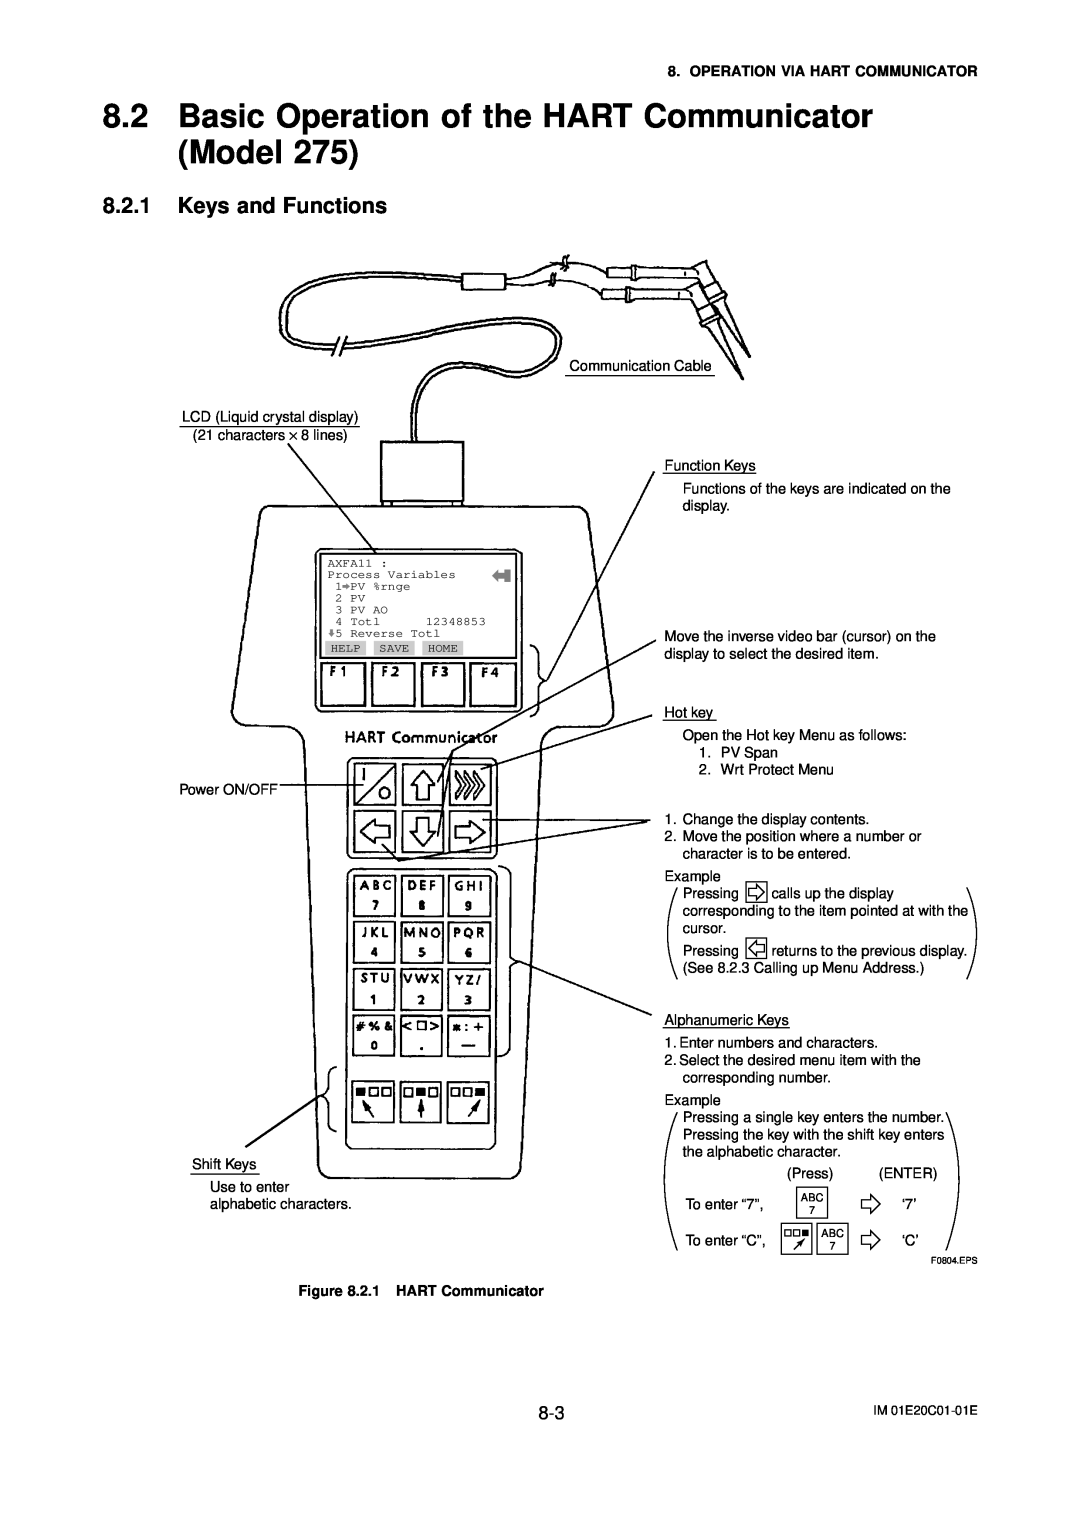 APC AXFA11G user manual Basic Operation of the HART Communicator Model, Keys and Functions, Operation Via Hart Communicator 